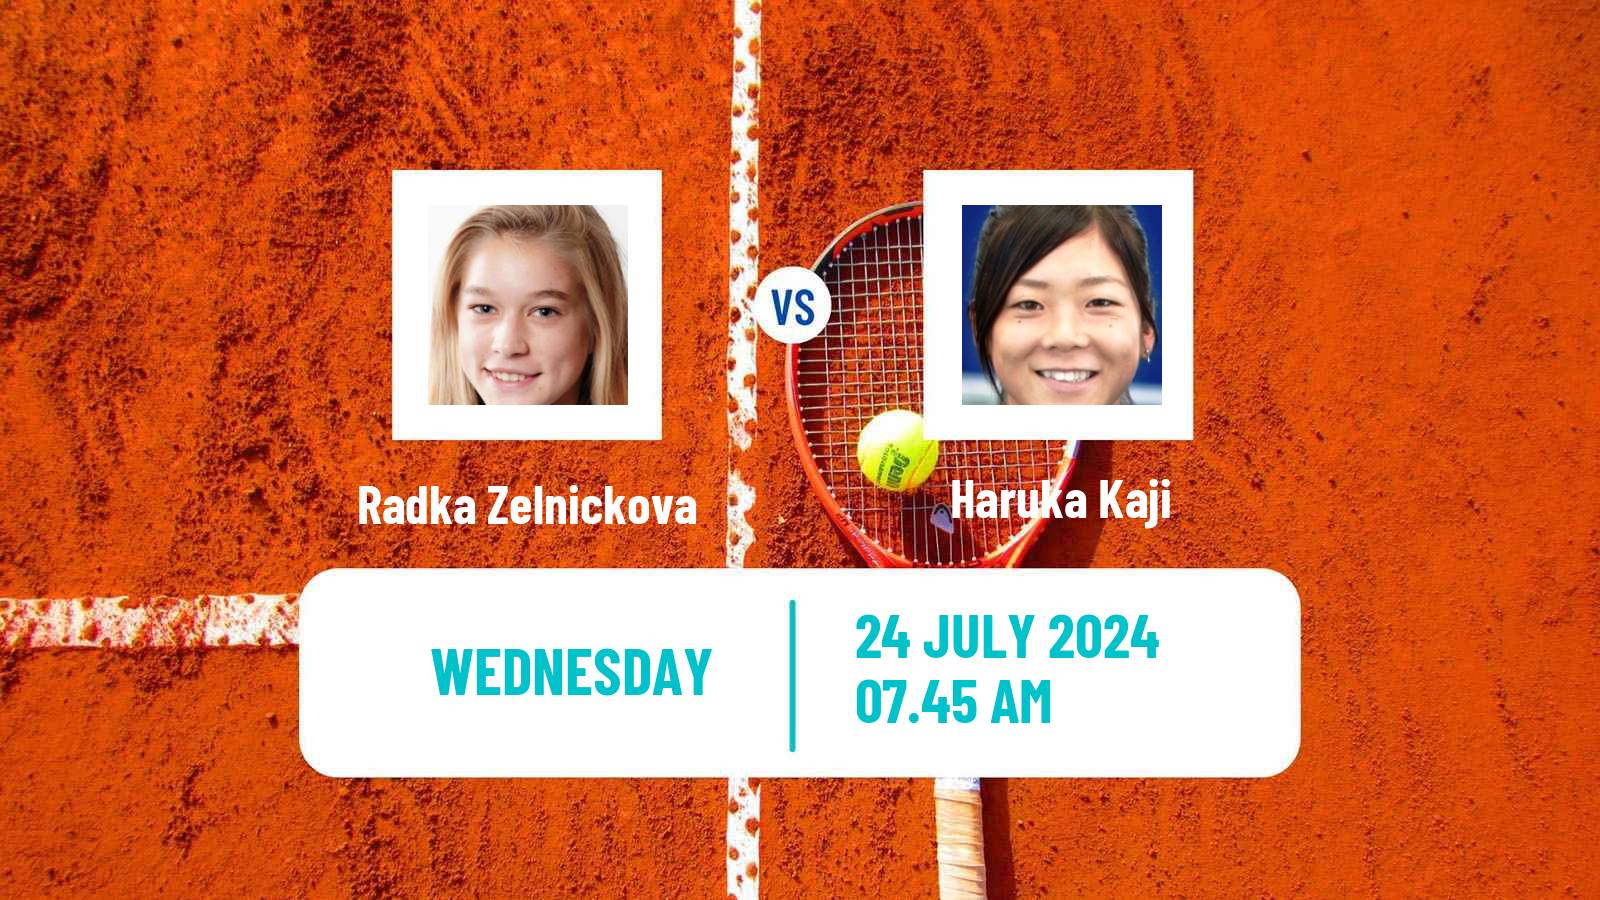 Tennis ITF W35 Segovia Women Radka Zelnickova - Haruka Kaji